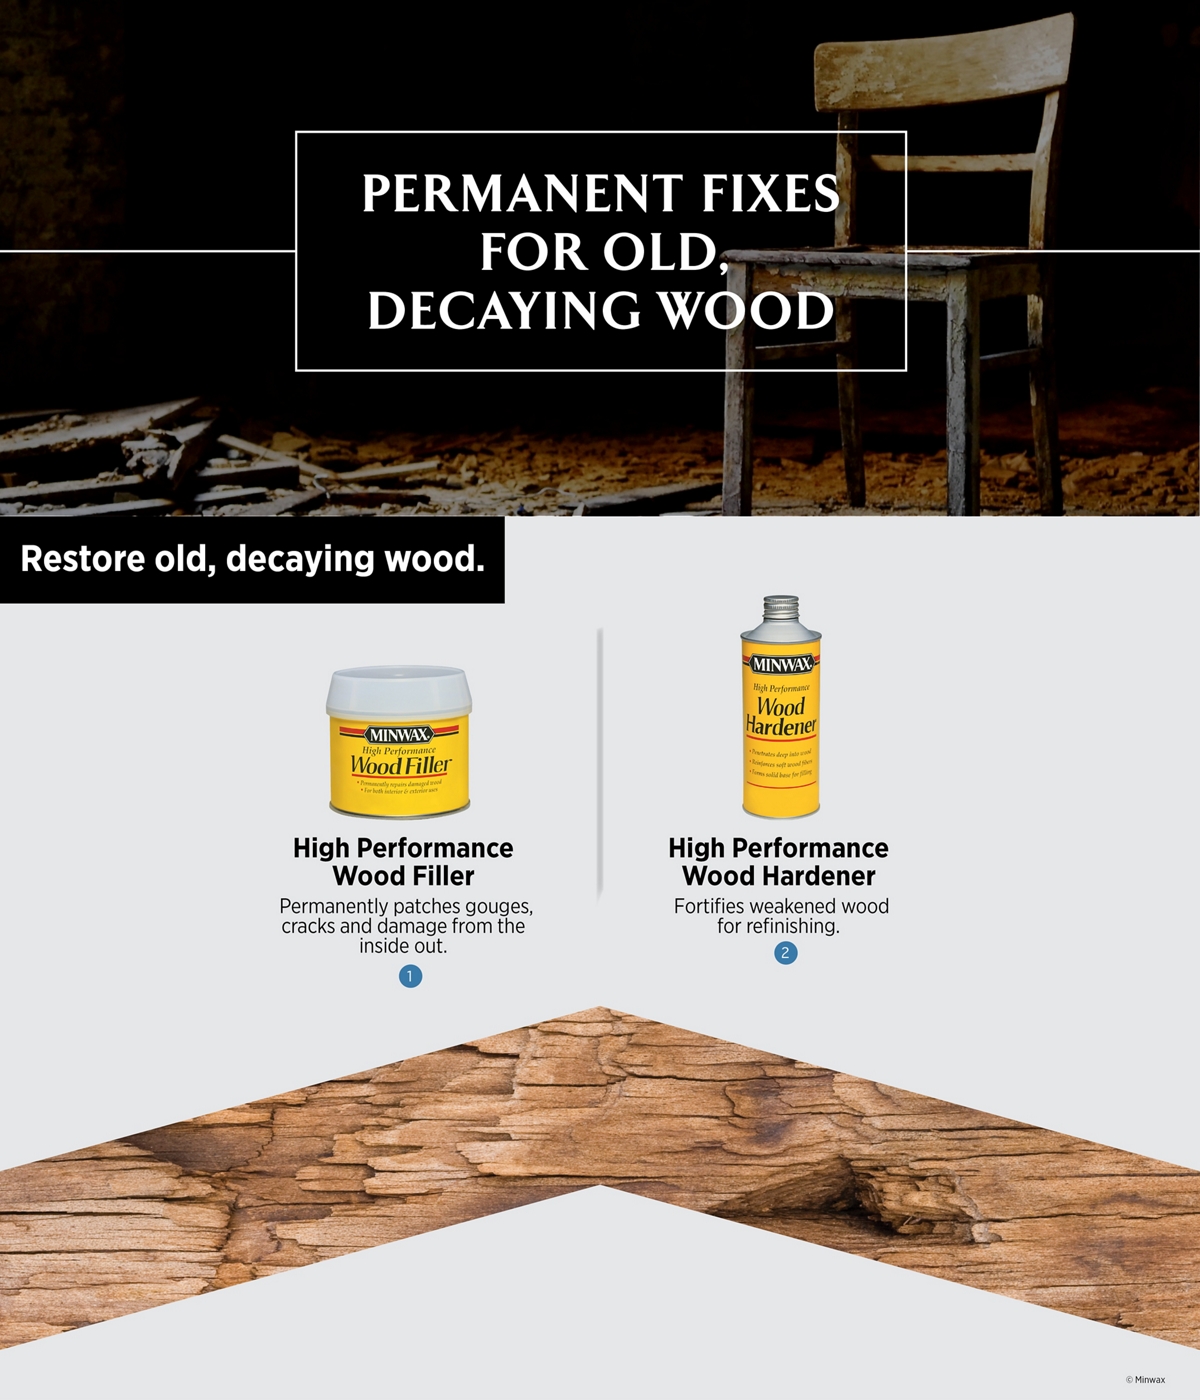 Minwax High Performance Wood Hardener